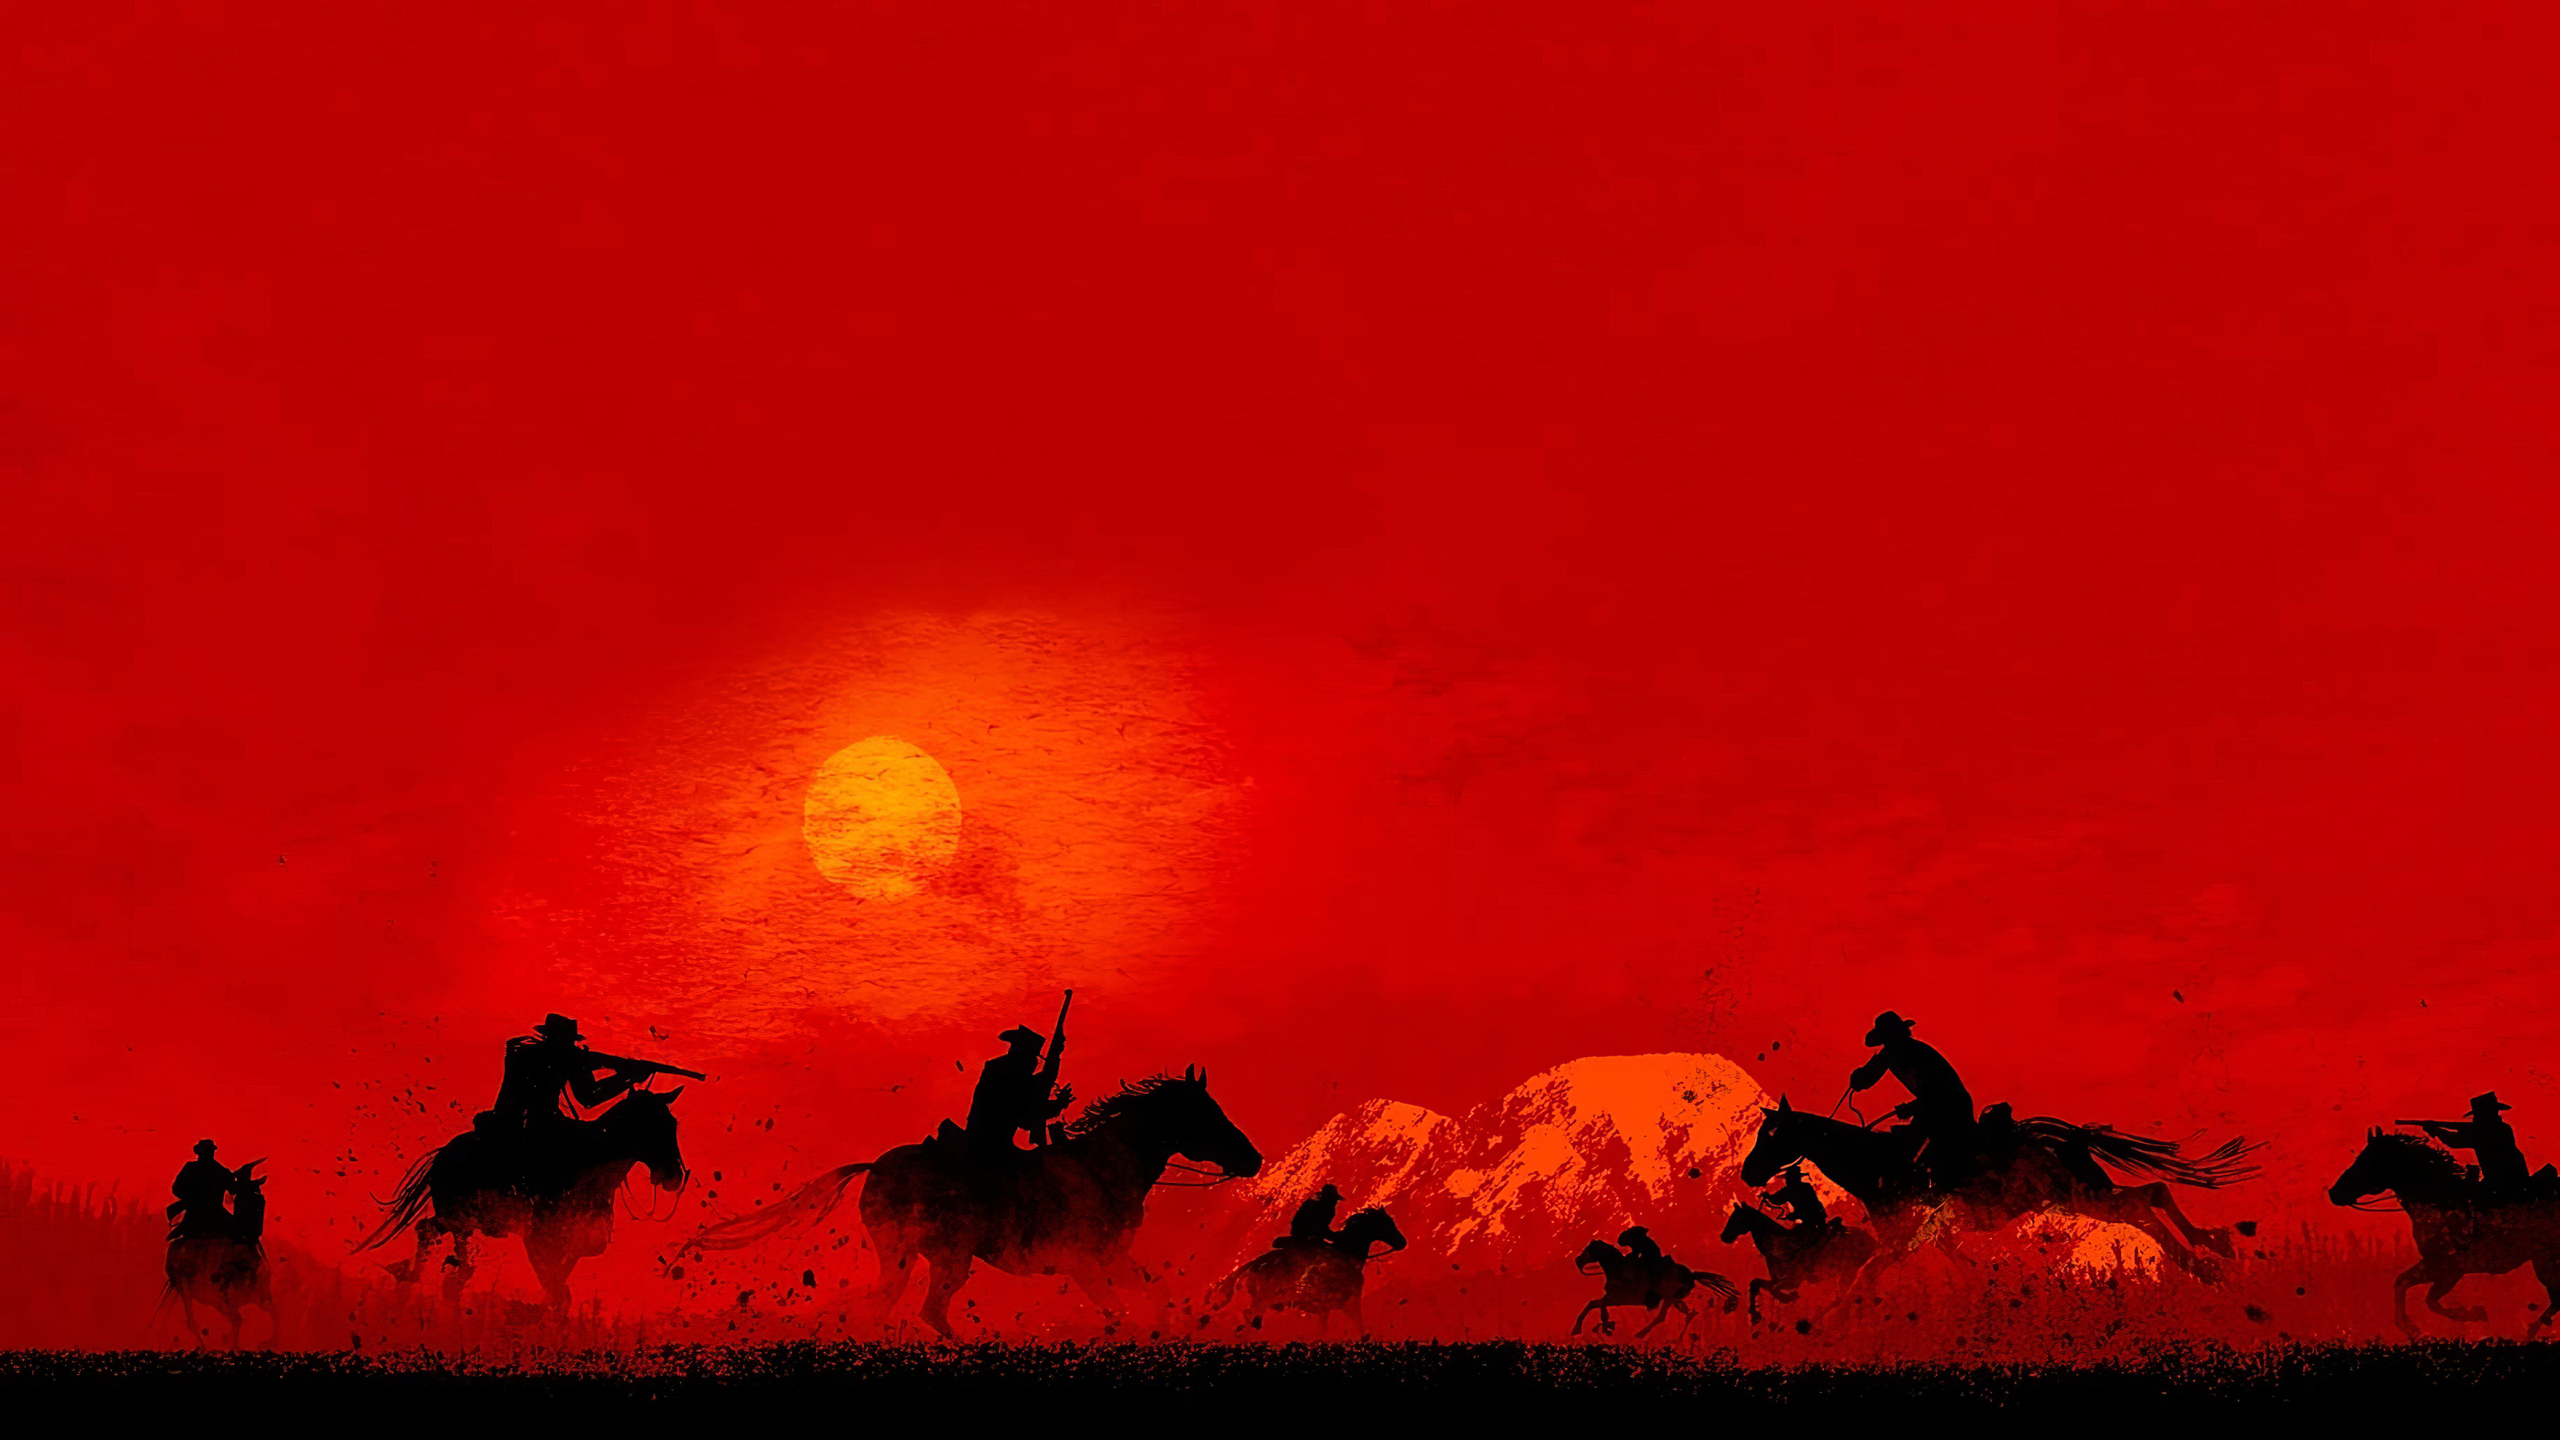 2560x1440 Red Dead Redemption 2 Game 2019 1440P Resolution Wallpaper